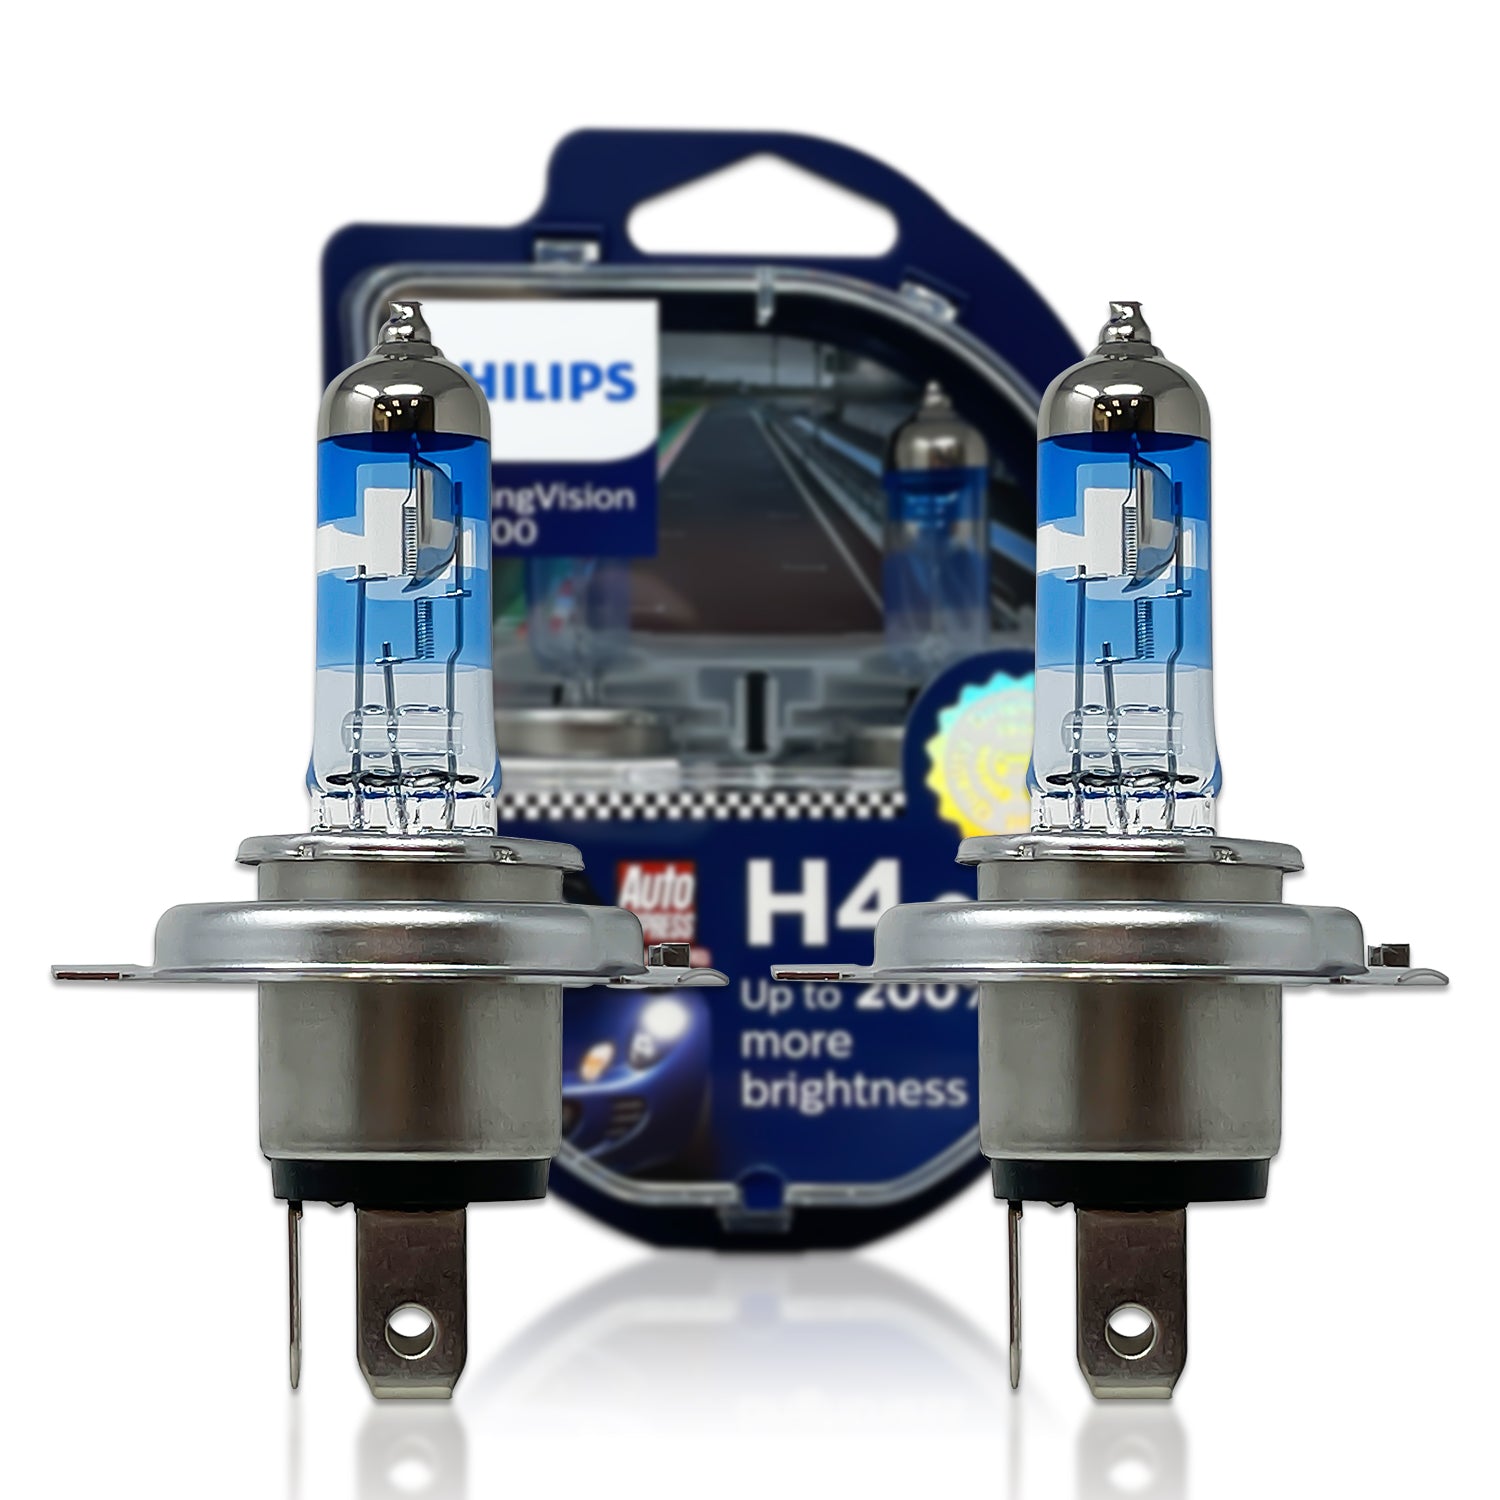 Philips H4 H7 9003 Racing Vision +150% More Brightness Auto Headlight Hi/lo  Beam Halogen Lamp Rally Performance ECE, Pair